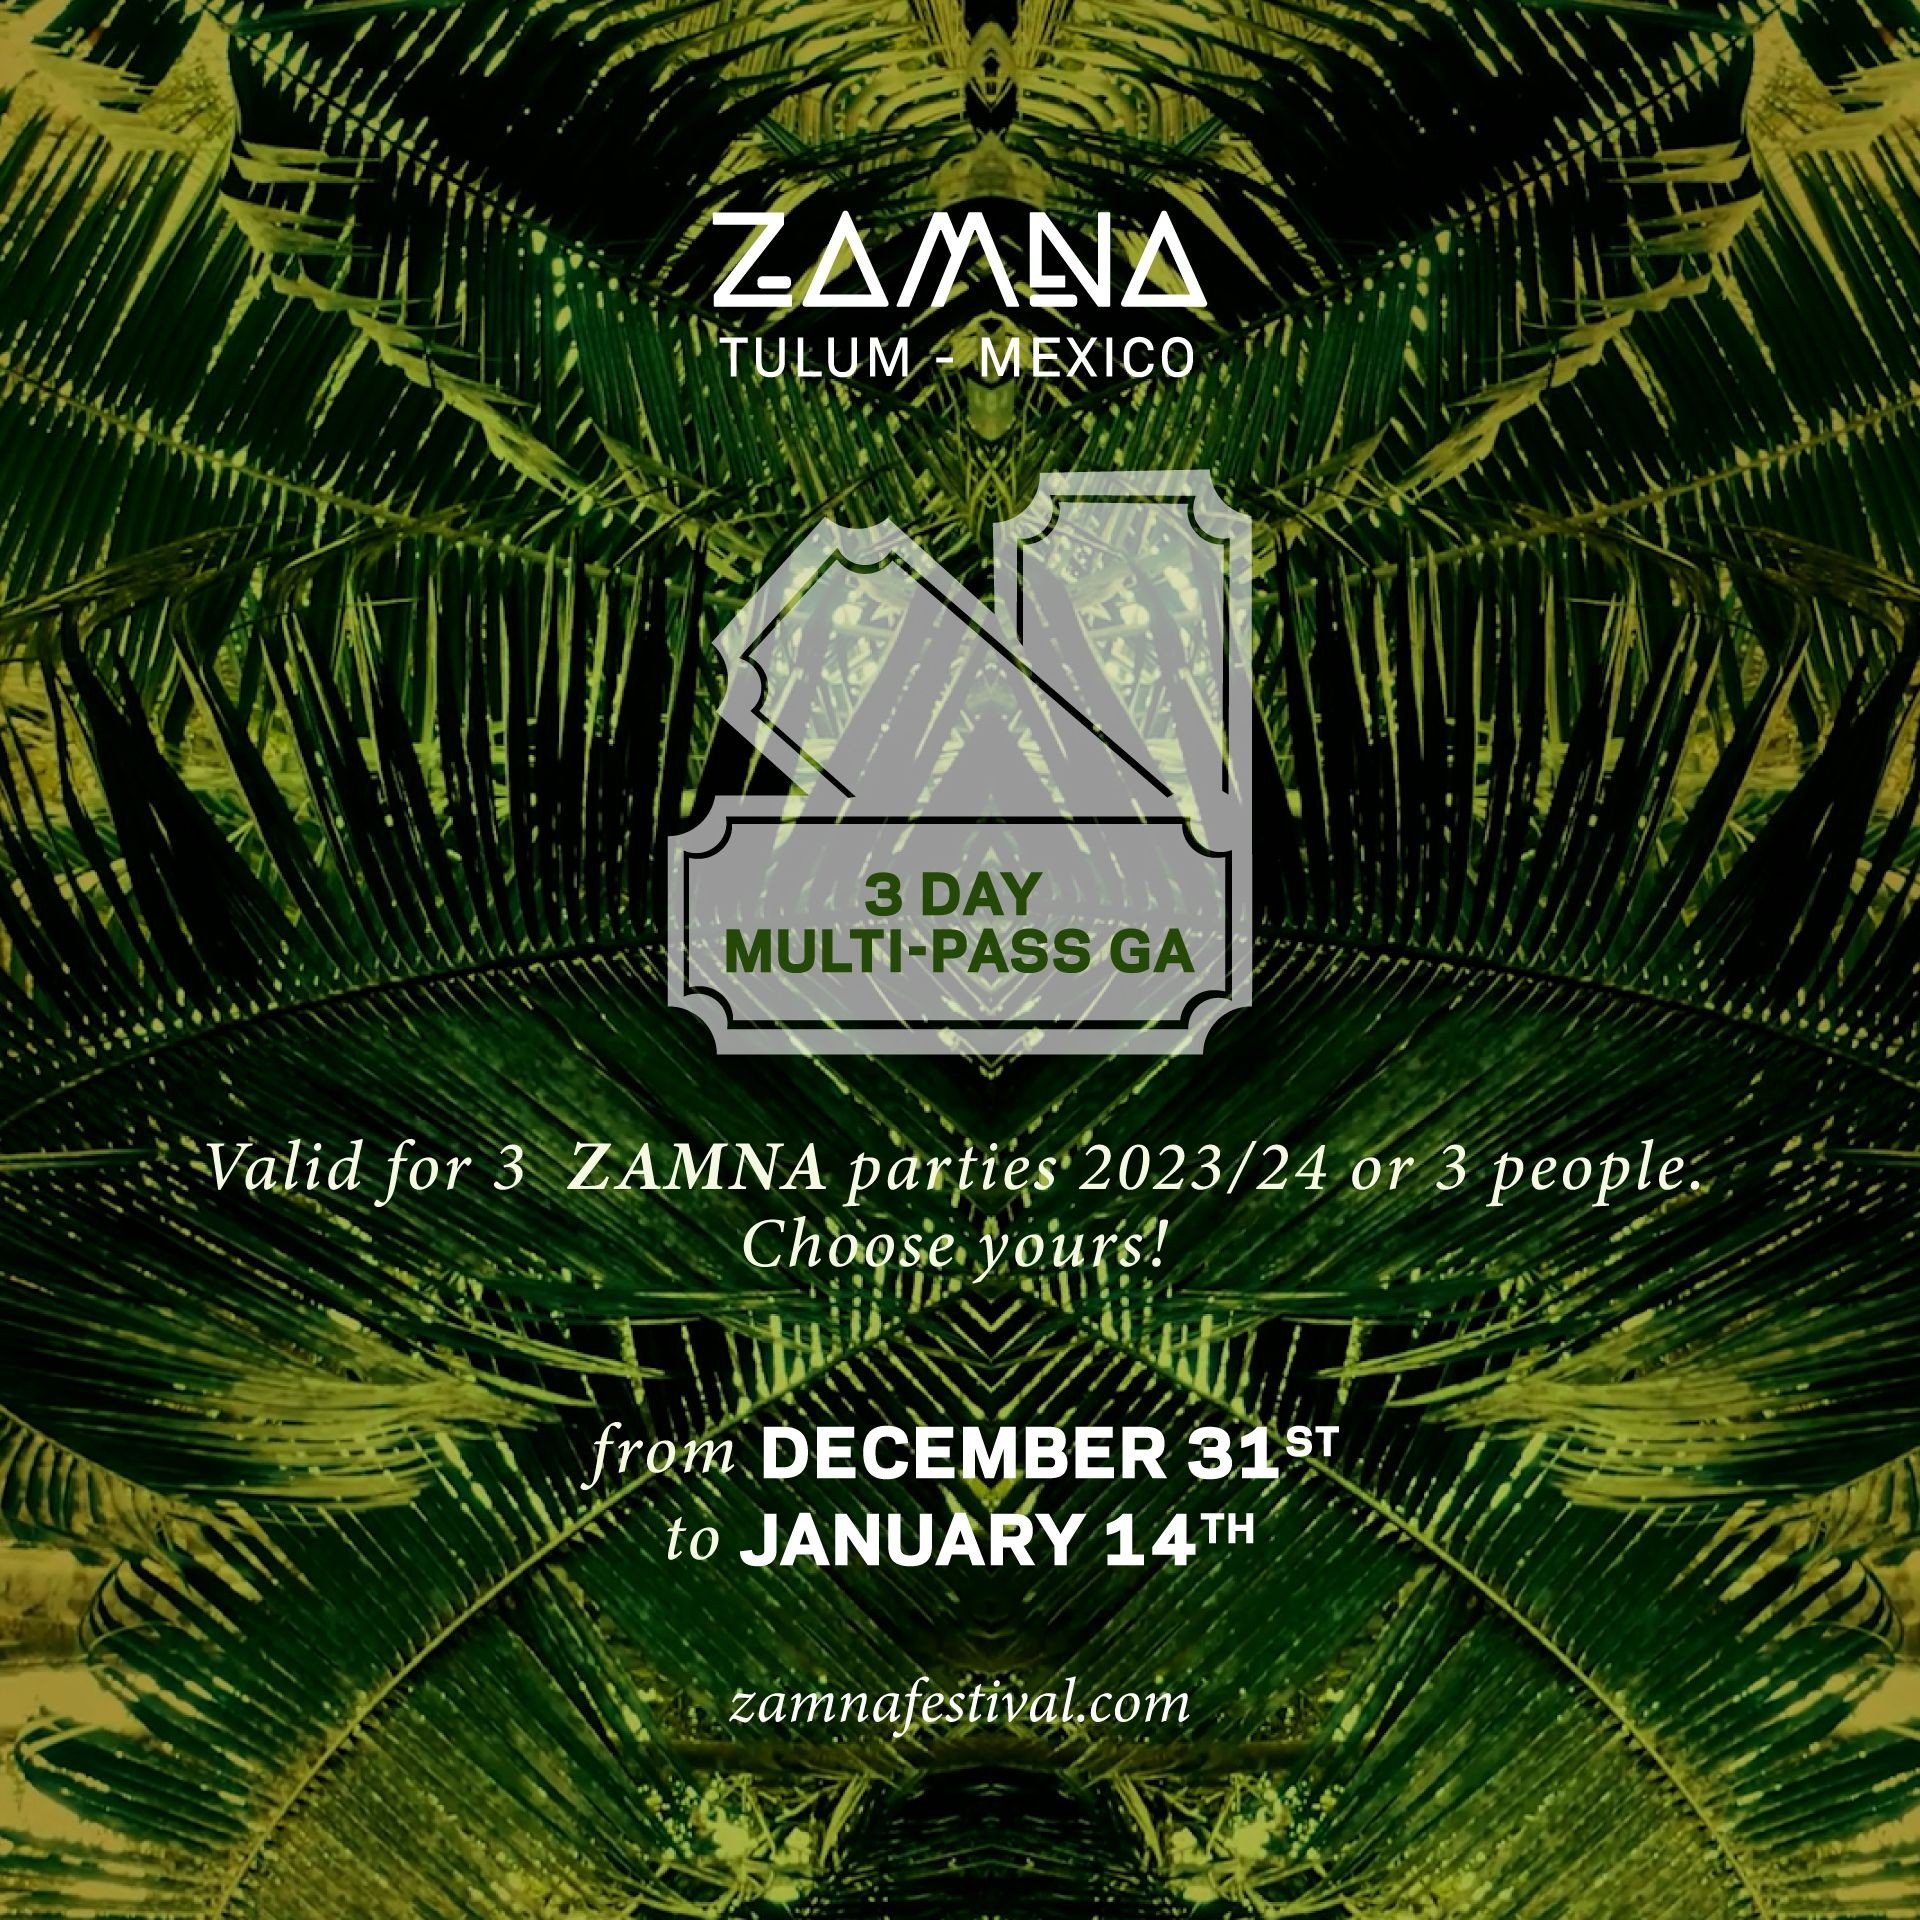 Zamna Tulum - Afterlife Tulum full lineup.